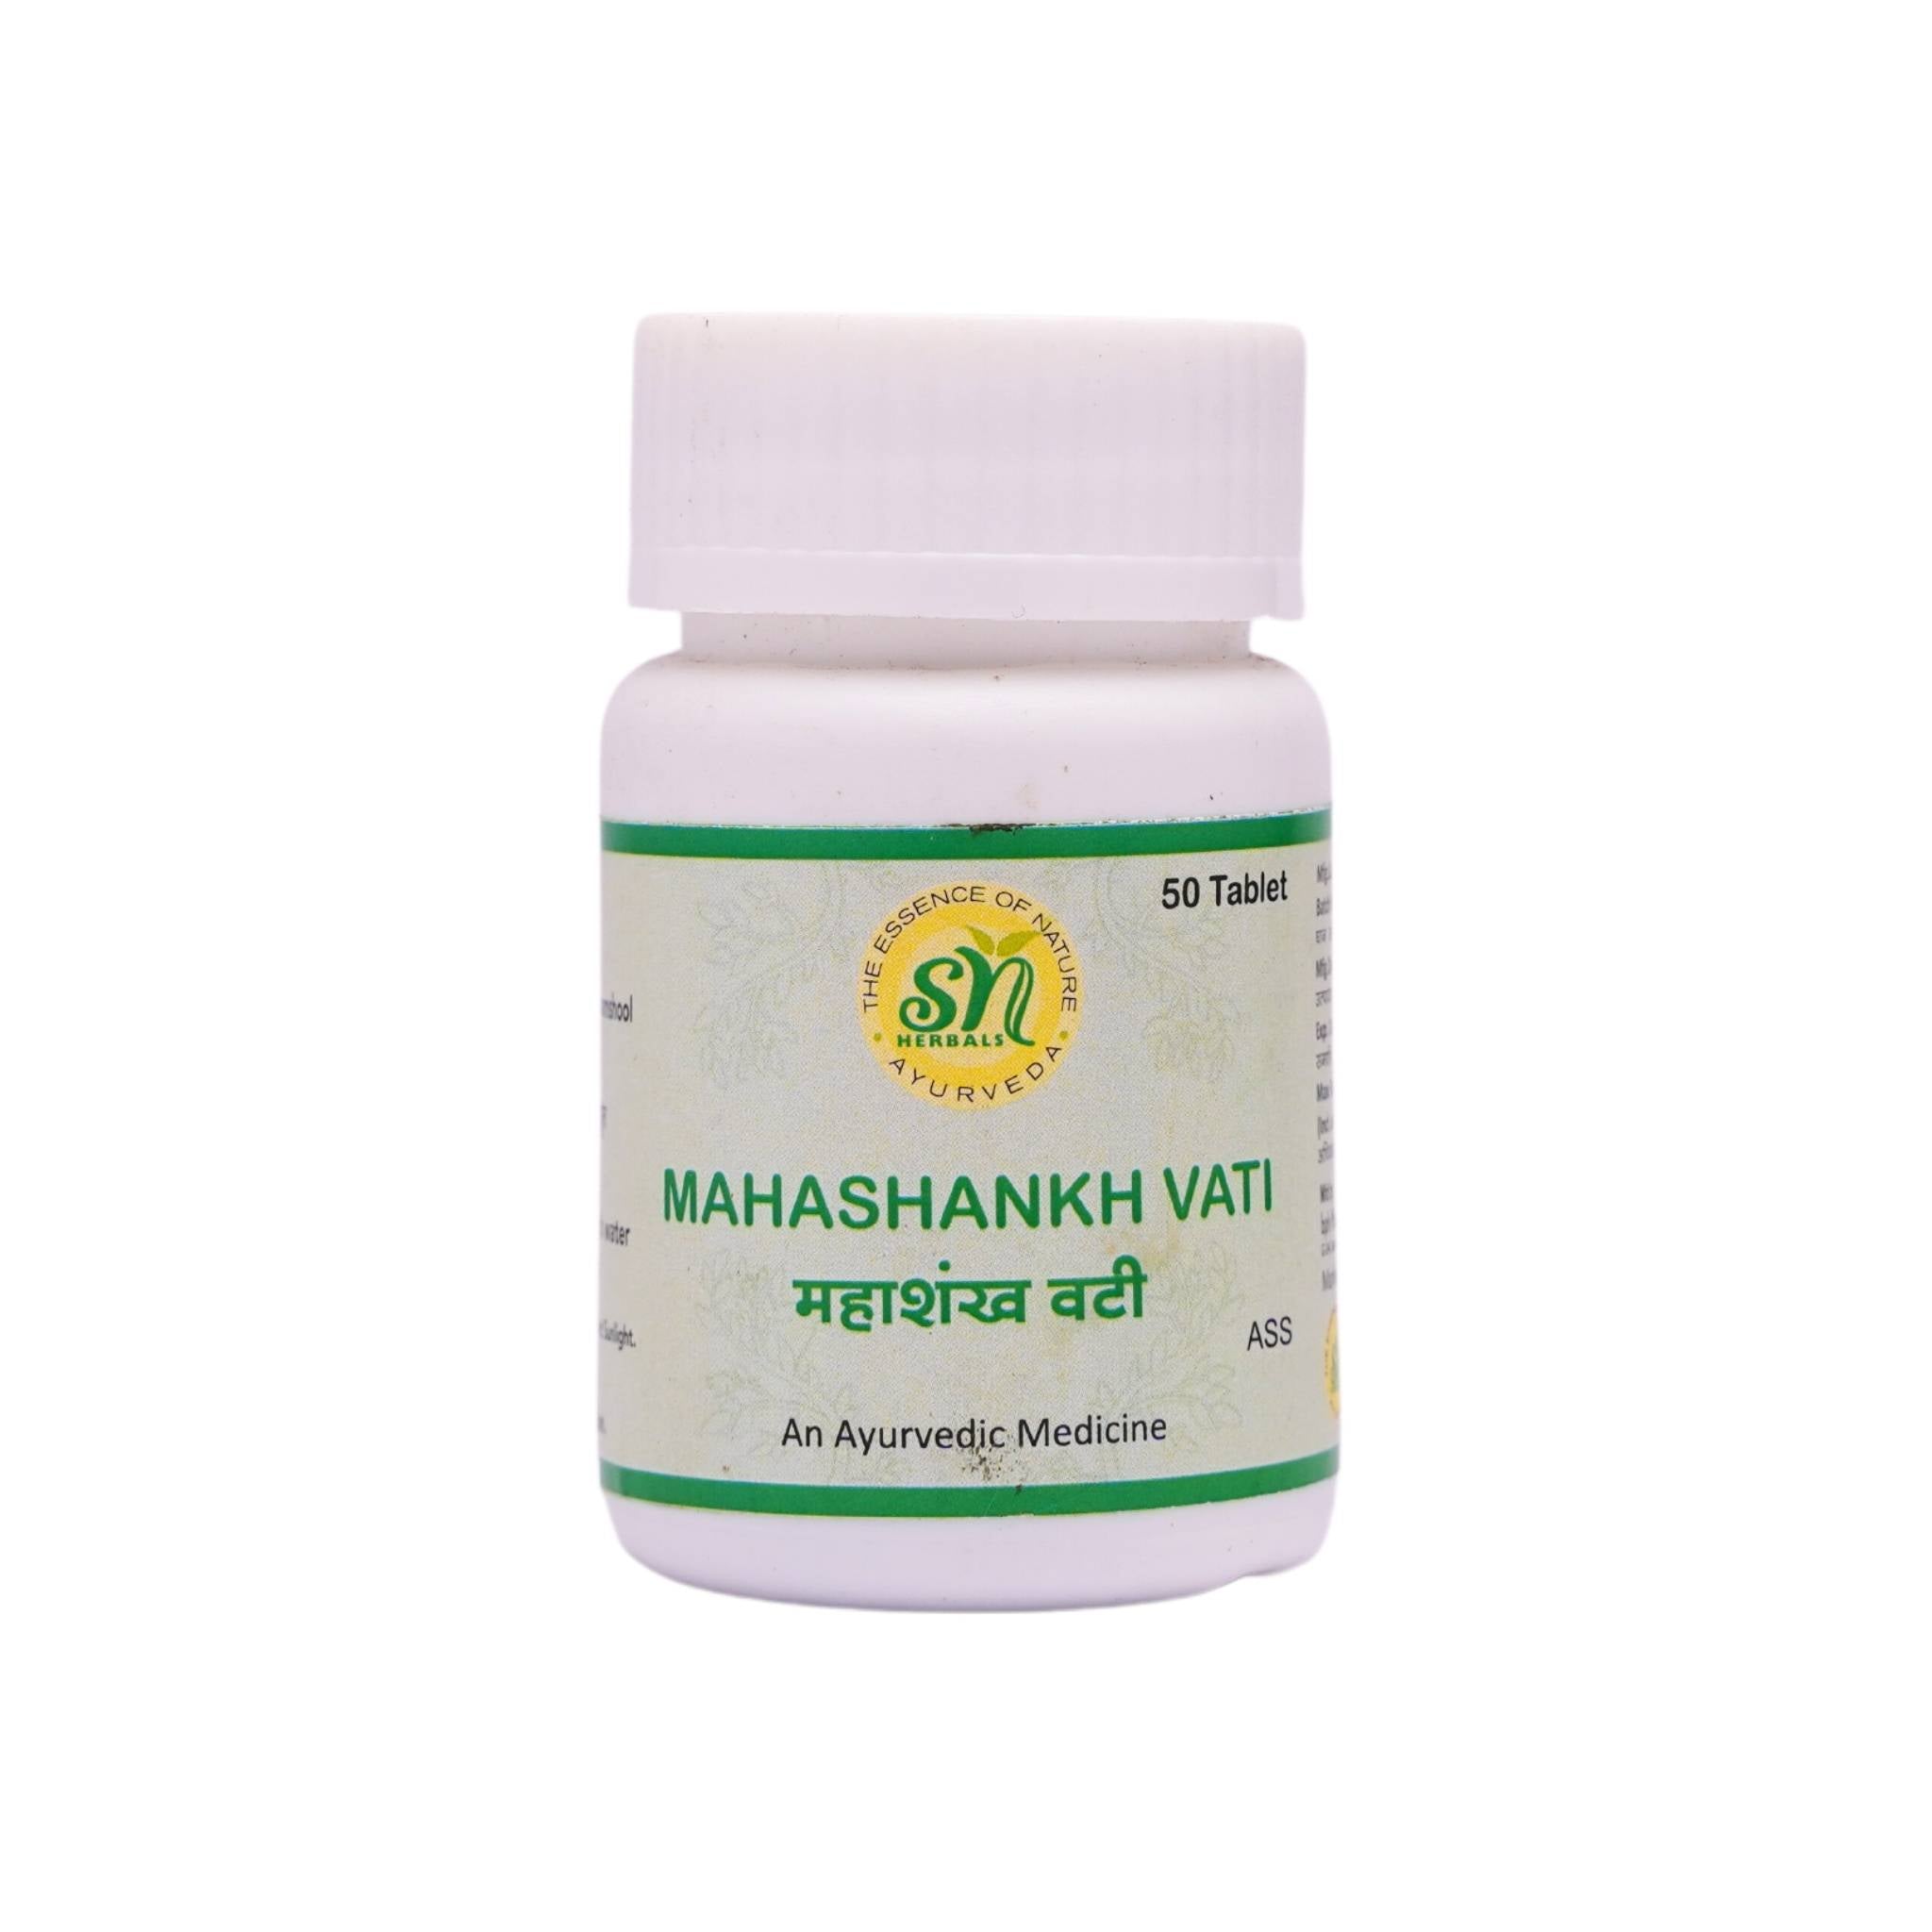 MAHASHANKH VATI Bottle of  50 QTY